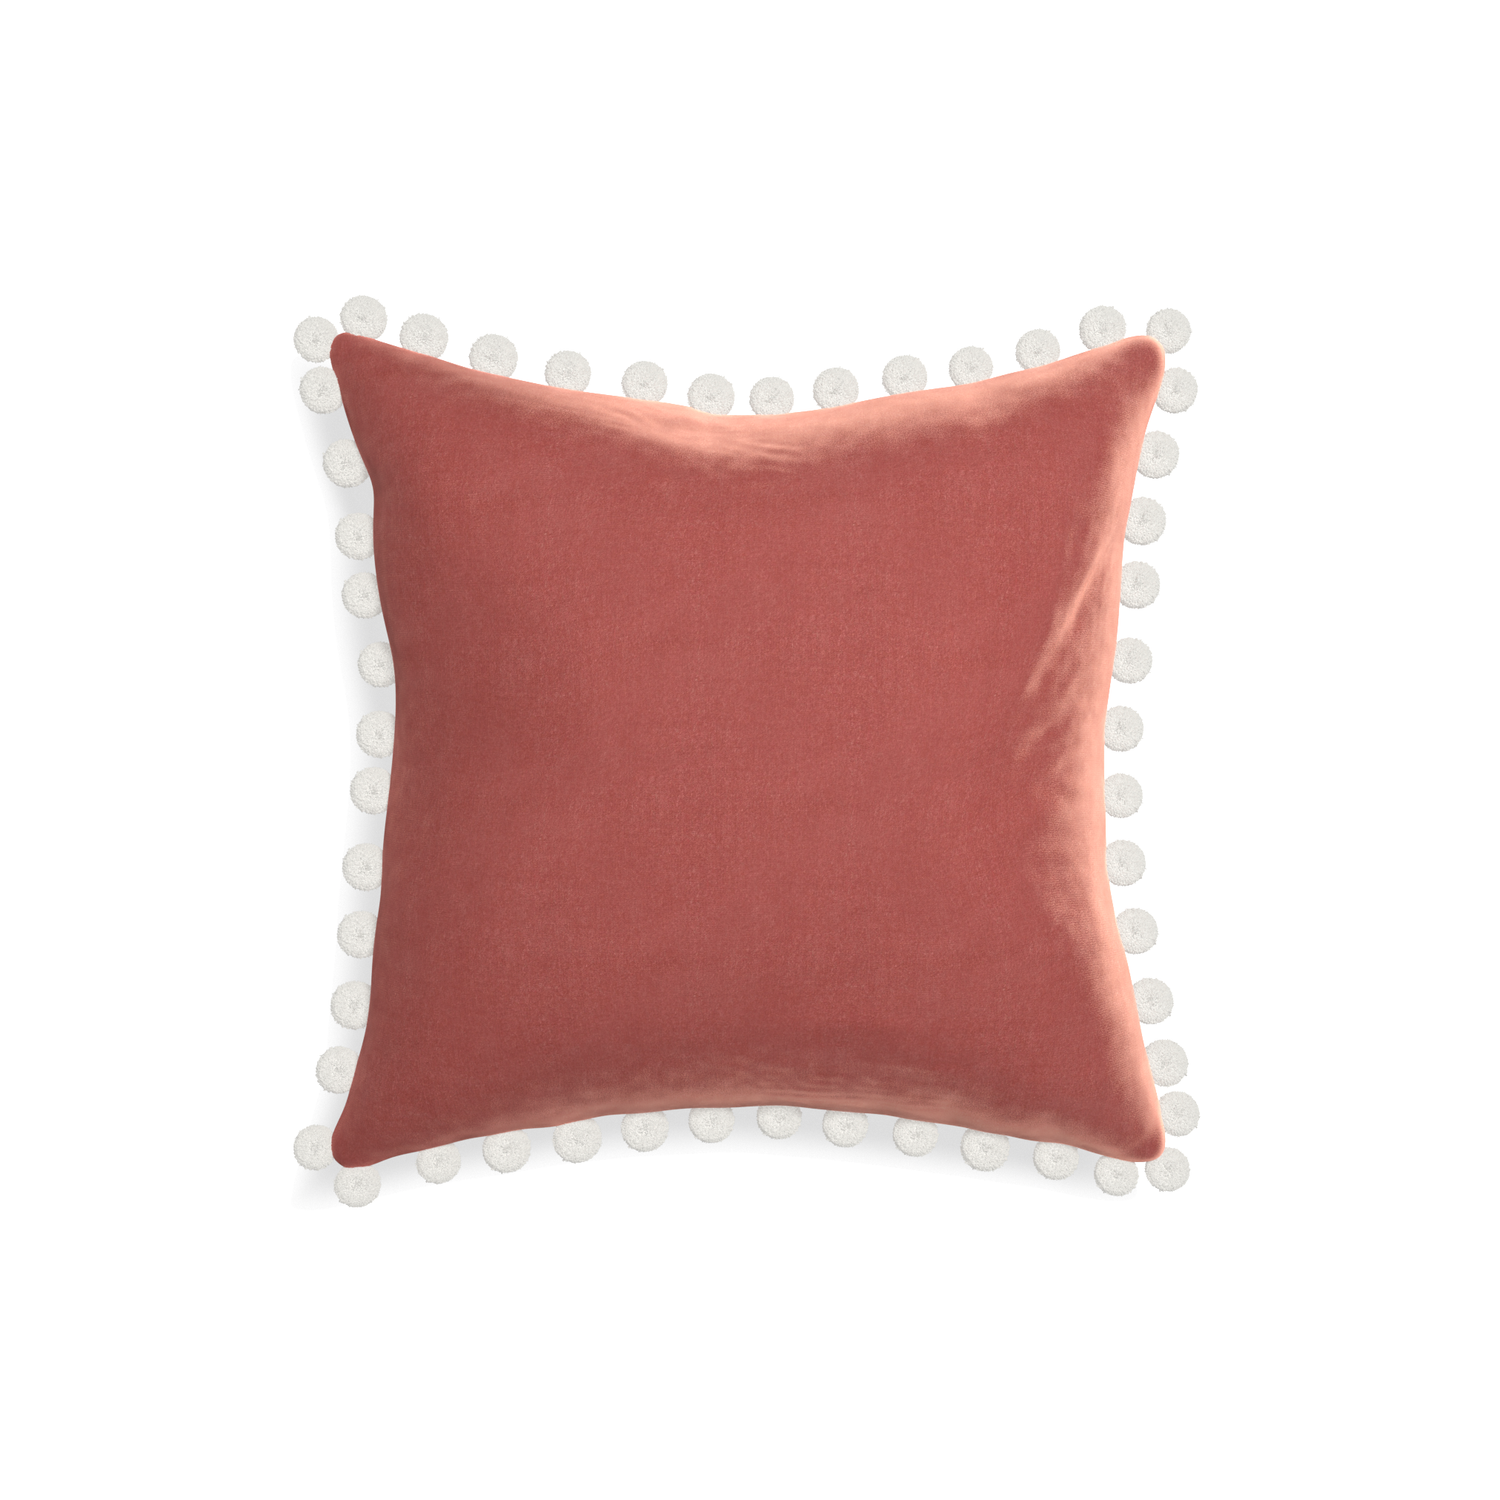 18-square cosmo velvet custom pillow with snow pom pom on white background